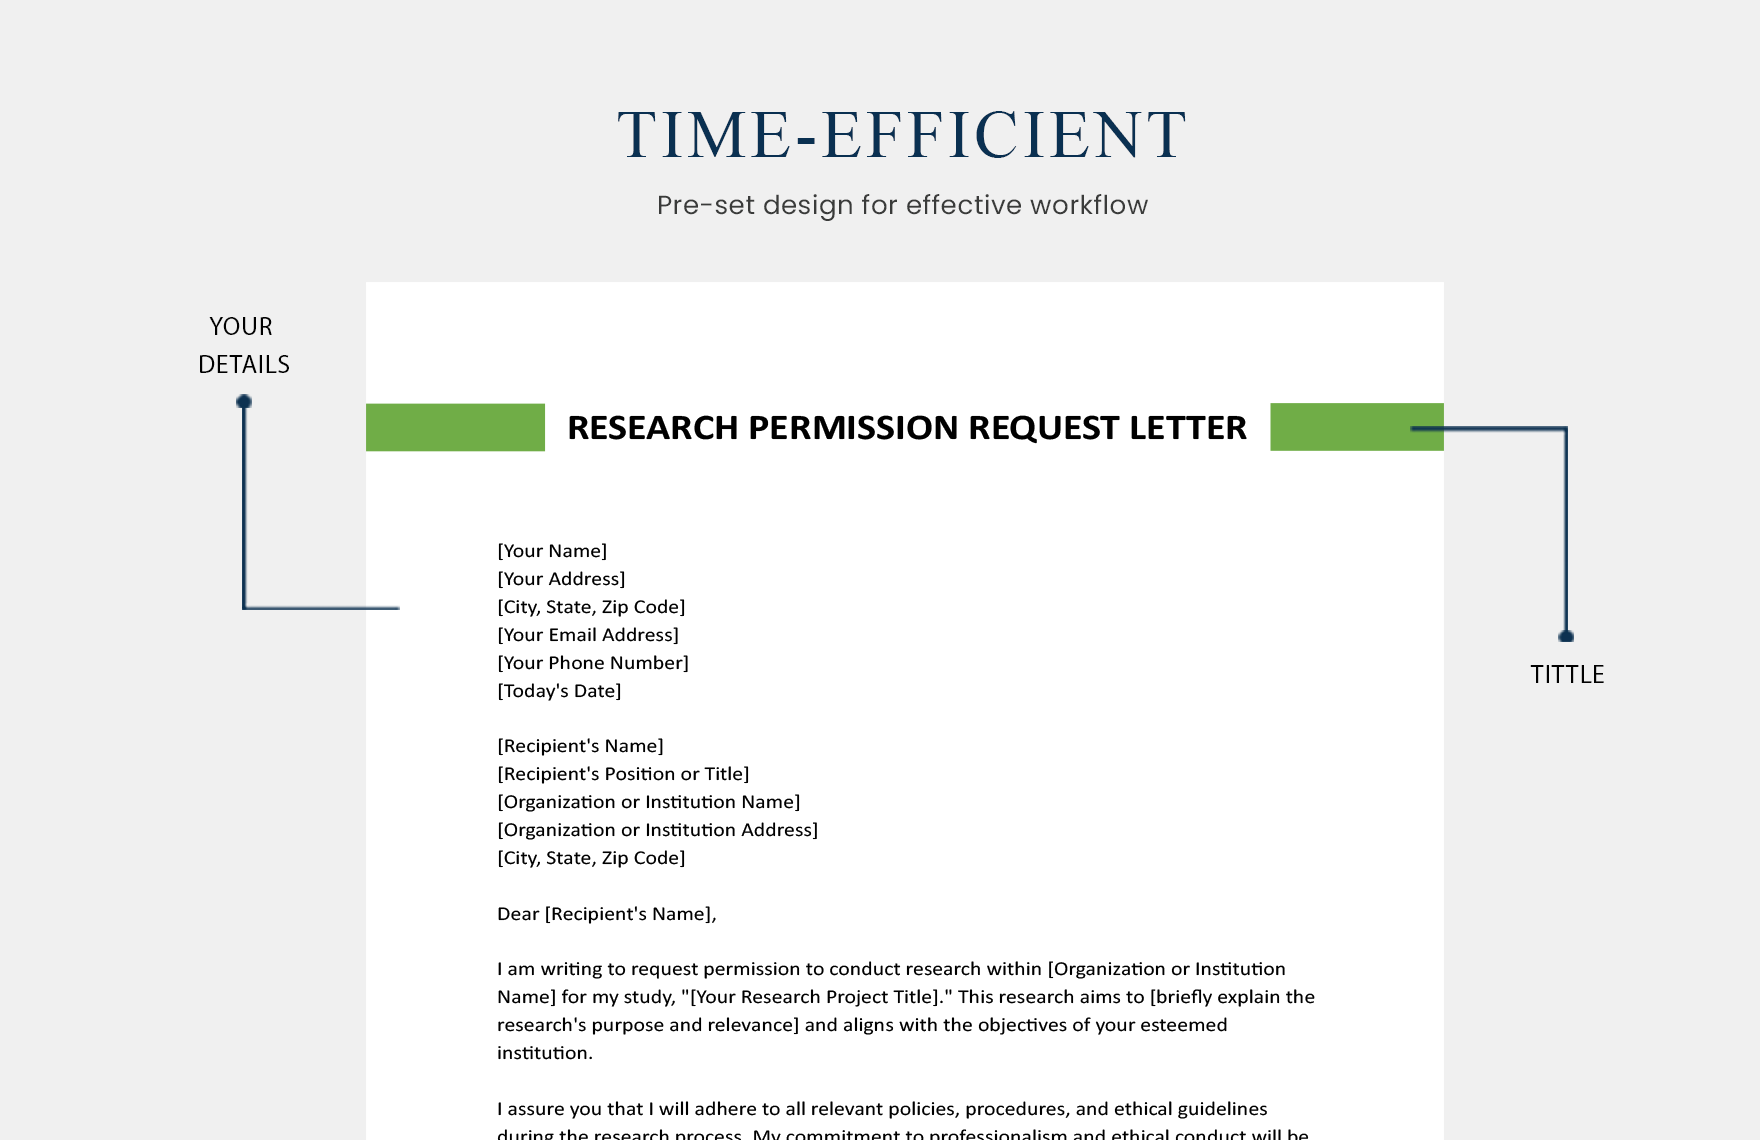 Research Permission Request Letter